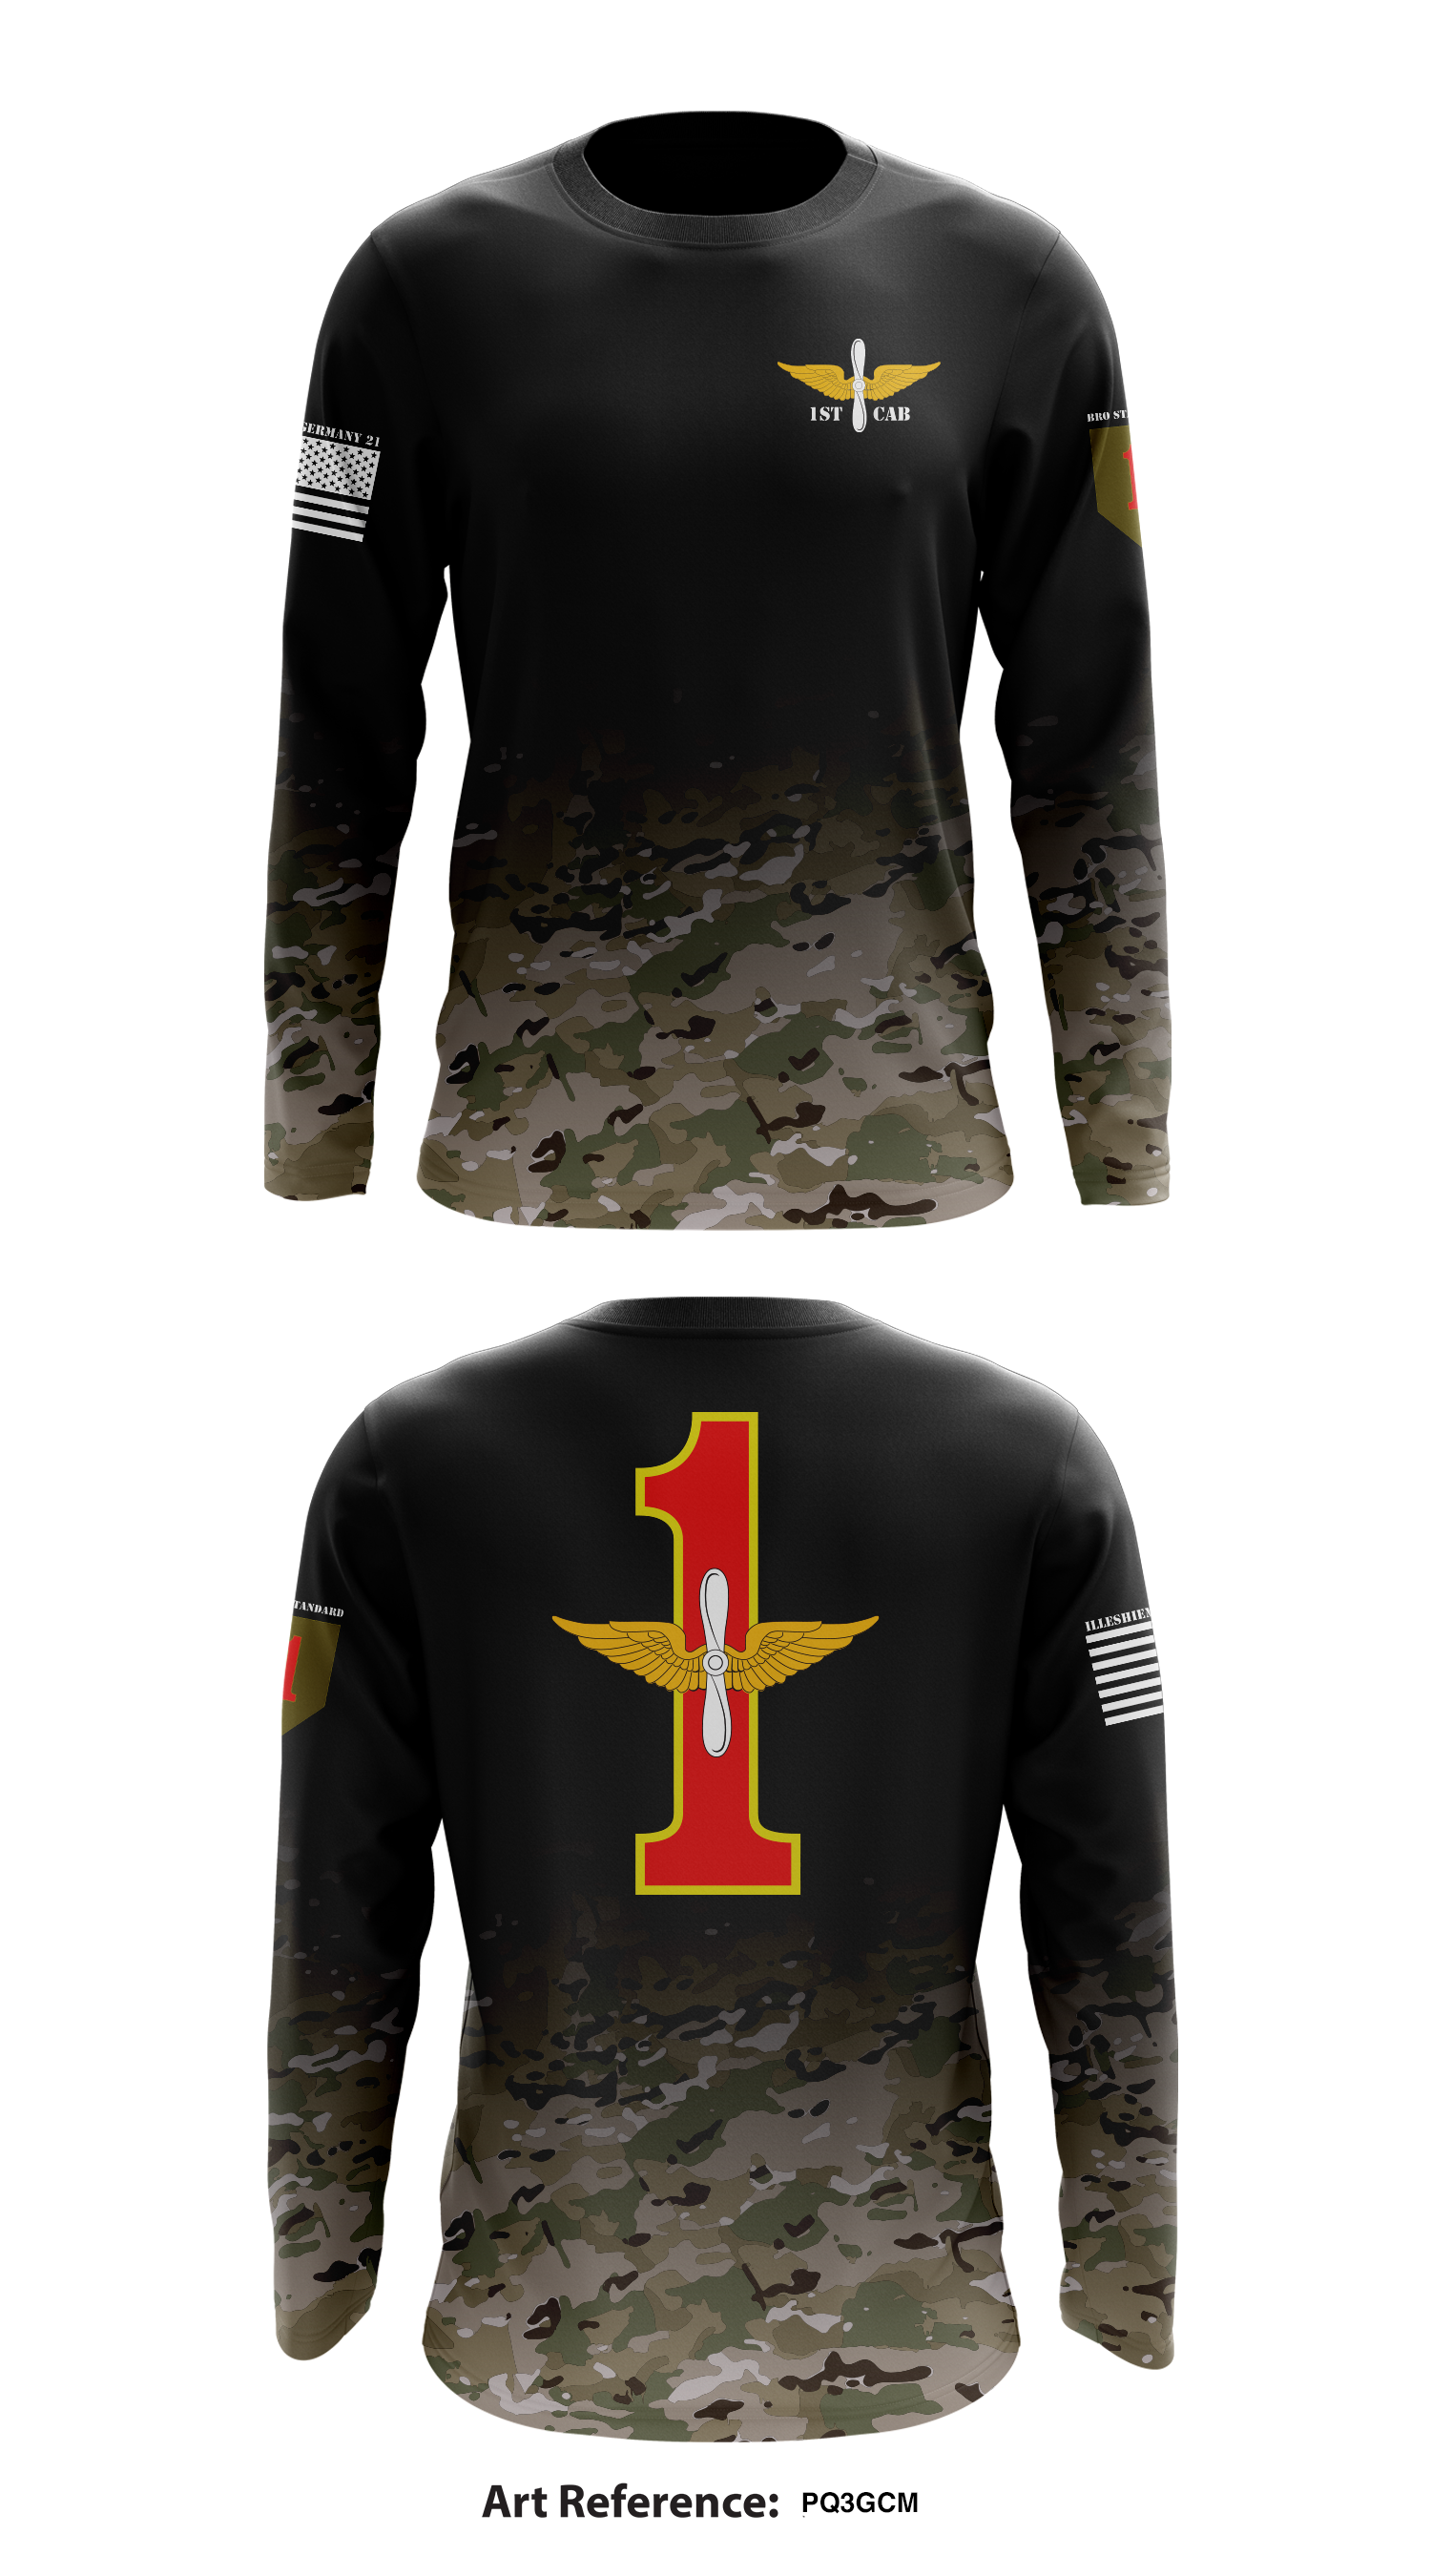 1st Store 1 Long-Sleeve Performance Shirt - JLT2y6 – Emblem Athletic